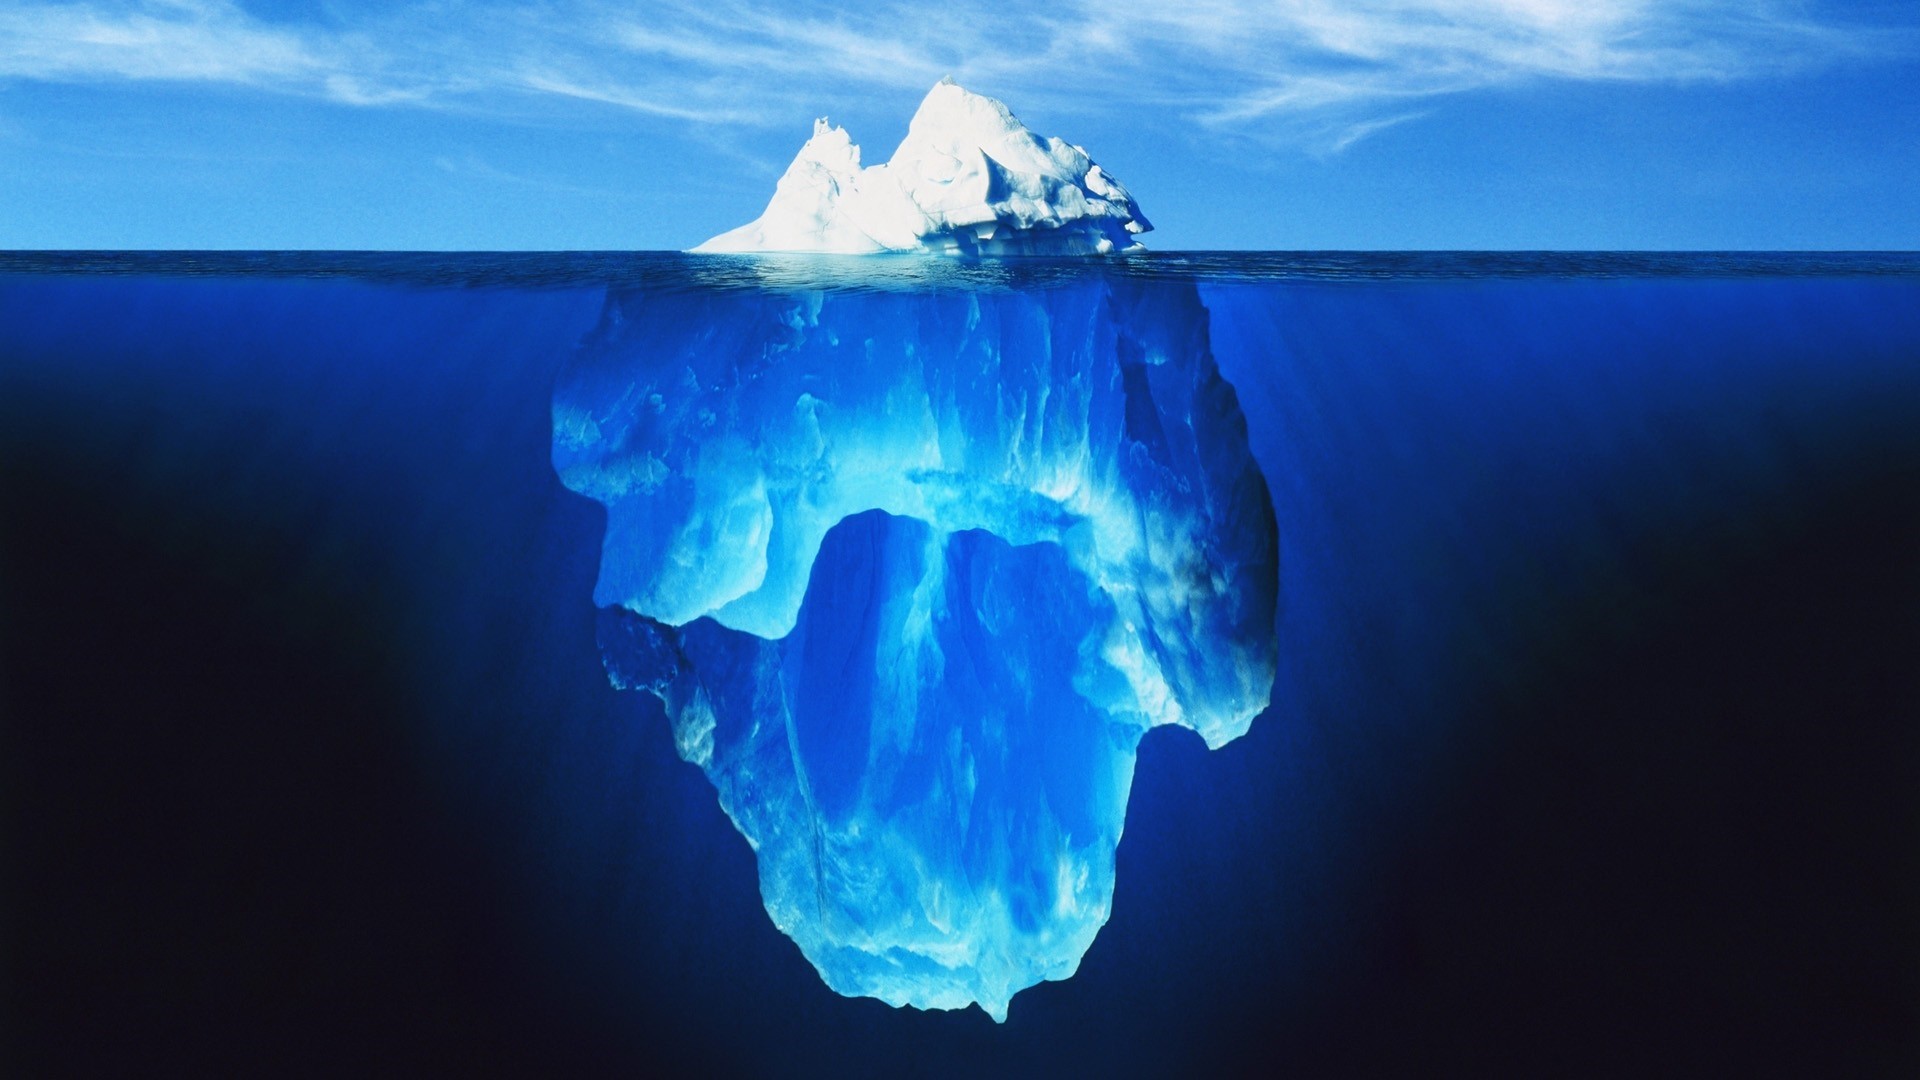 Iceberg hd wallpaper download